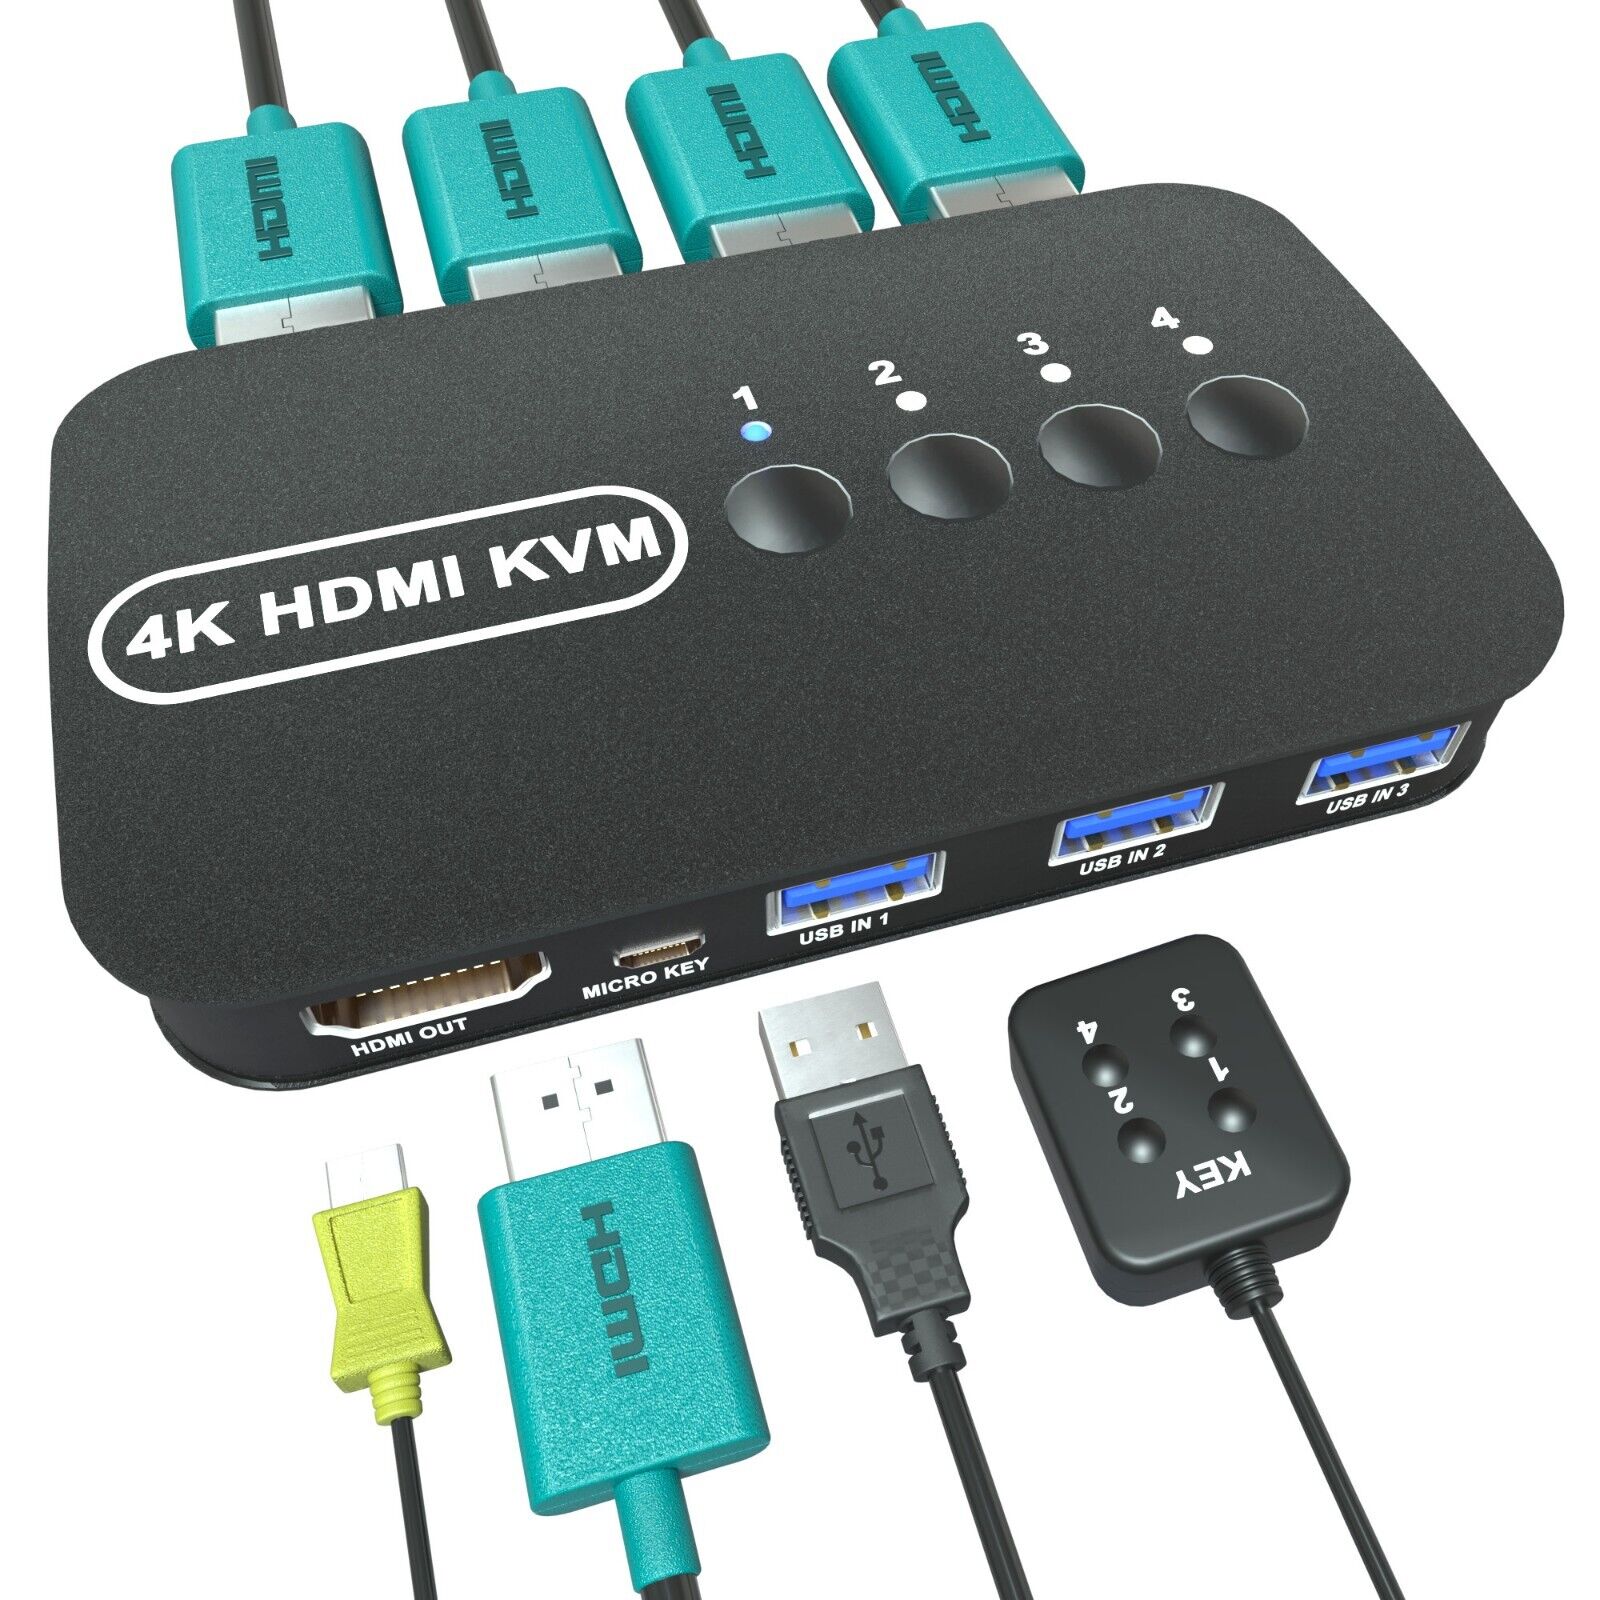 Kvm Switch HDMI, 4 Port 4K@30Hz Usb Switcher,4 PC share 1 monitor,Mouse,keyboard